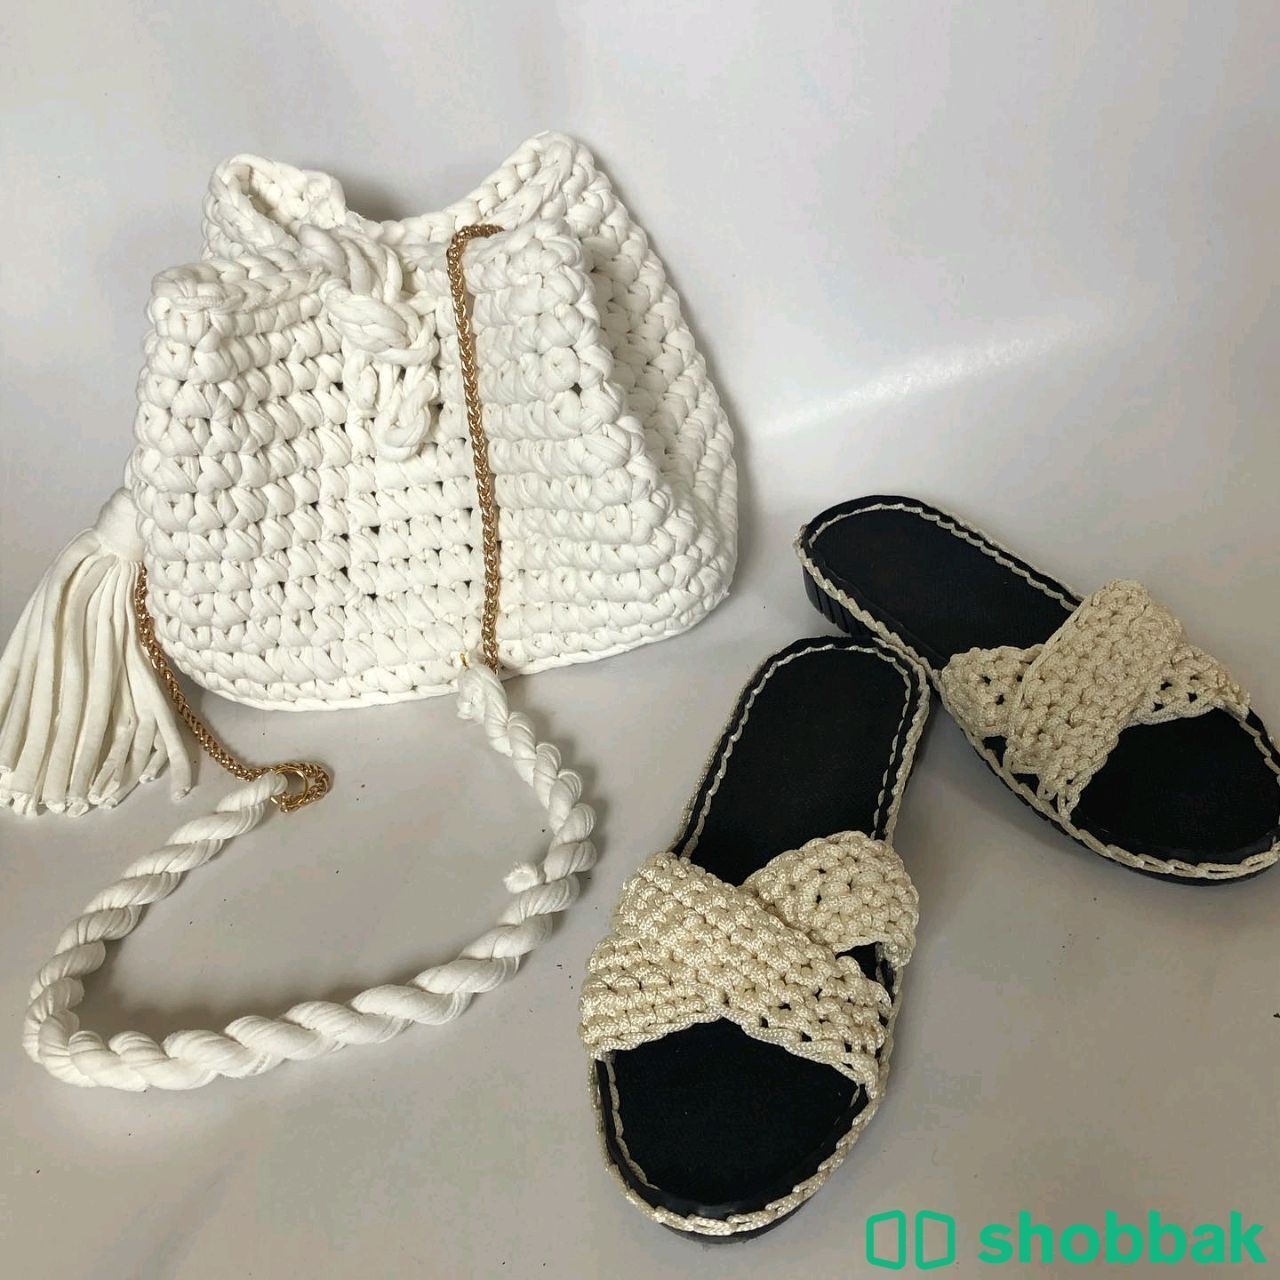 crochett_roro
 Shobbak Saudi Arabia